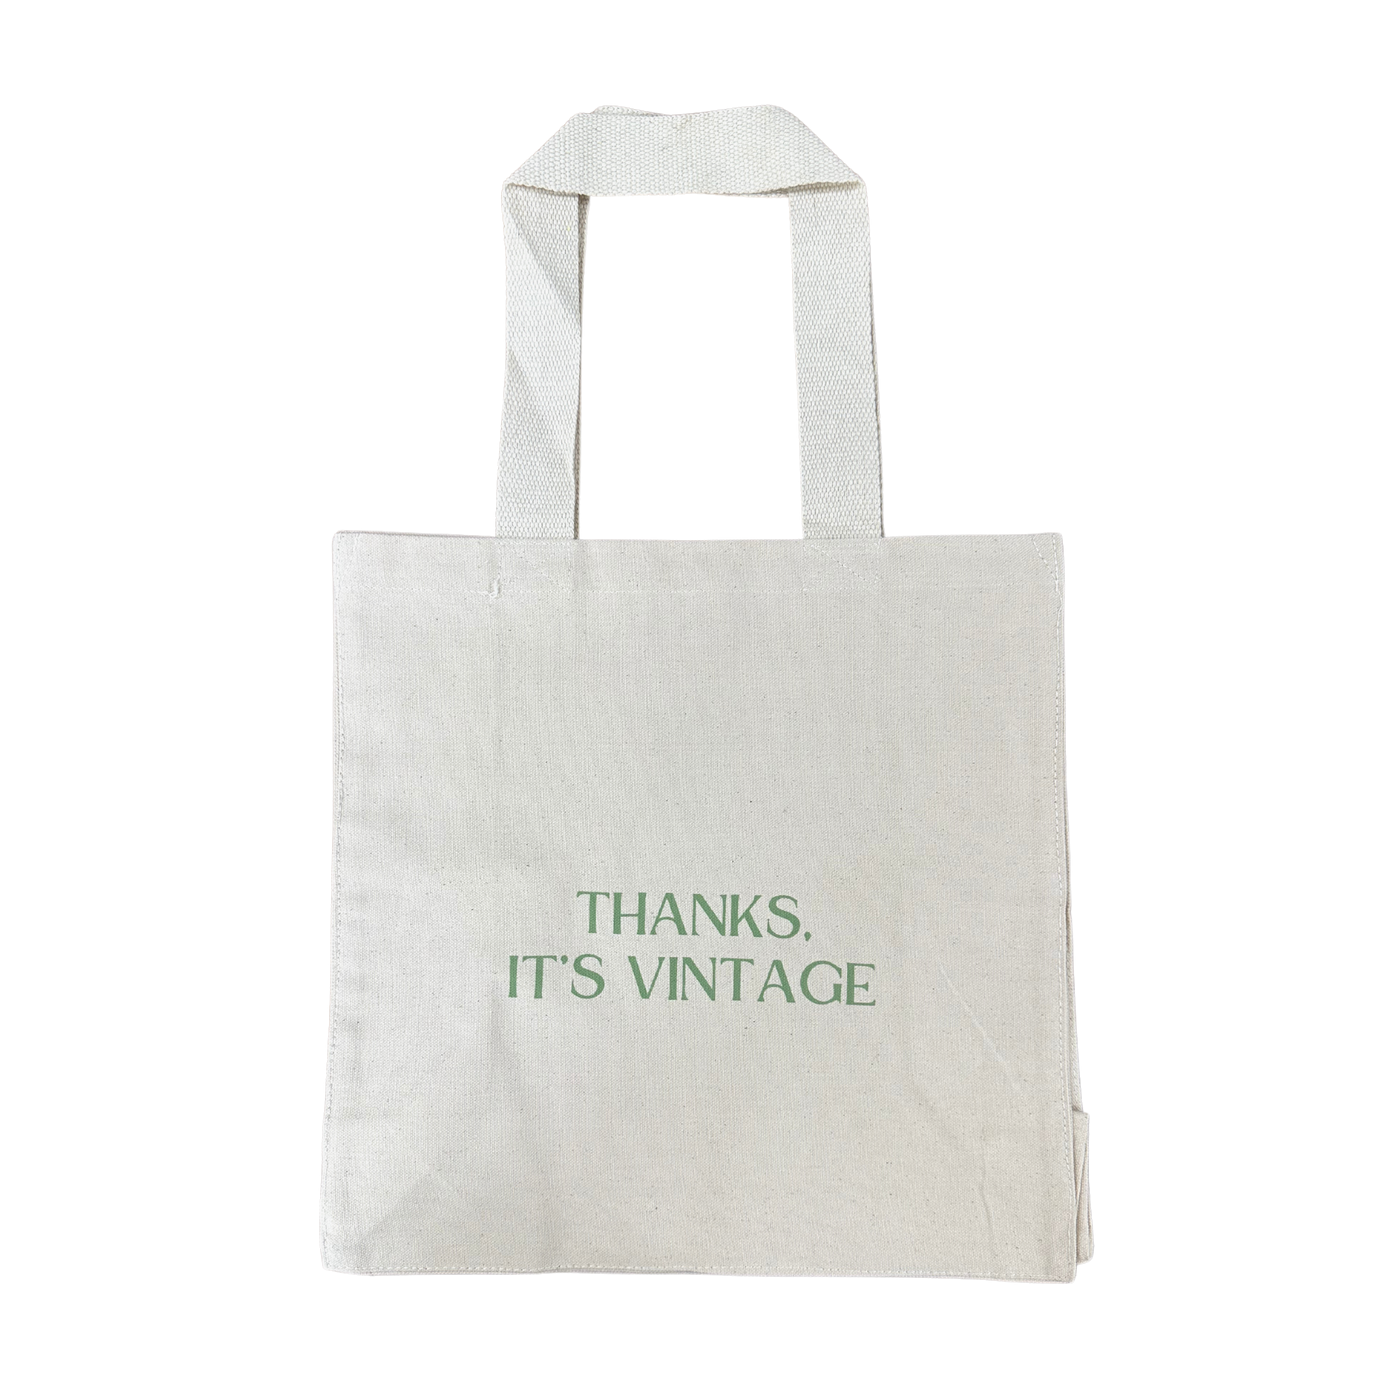 'Thanks, It's Vintage' LVF Tote Bag